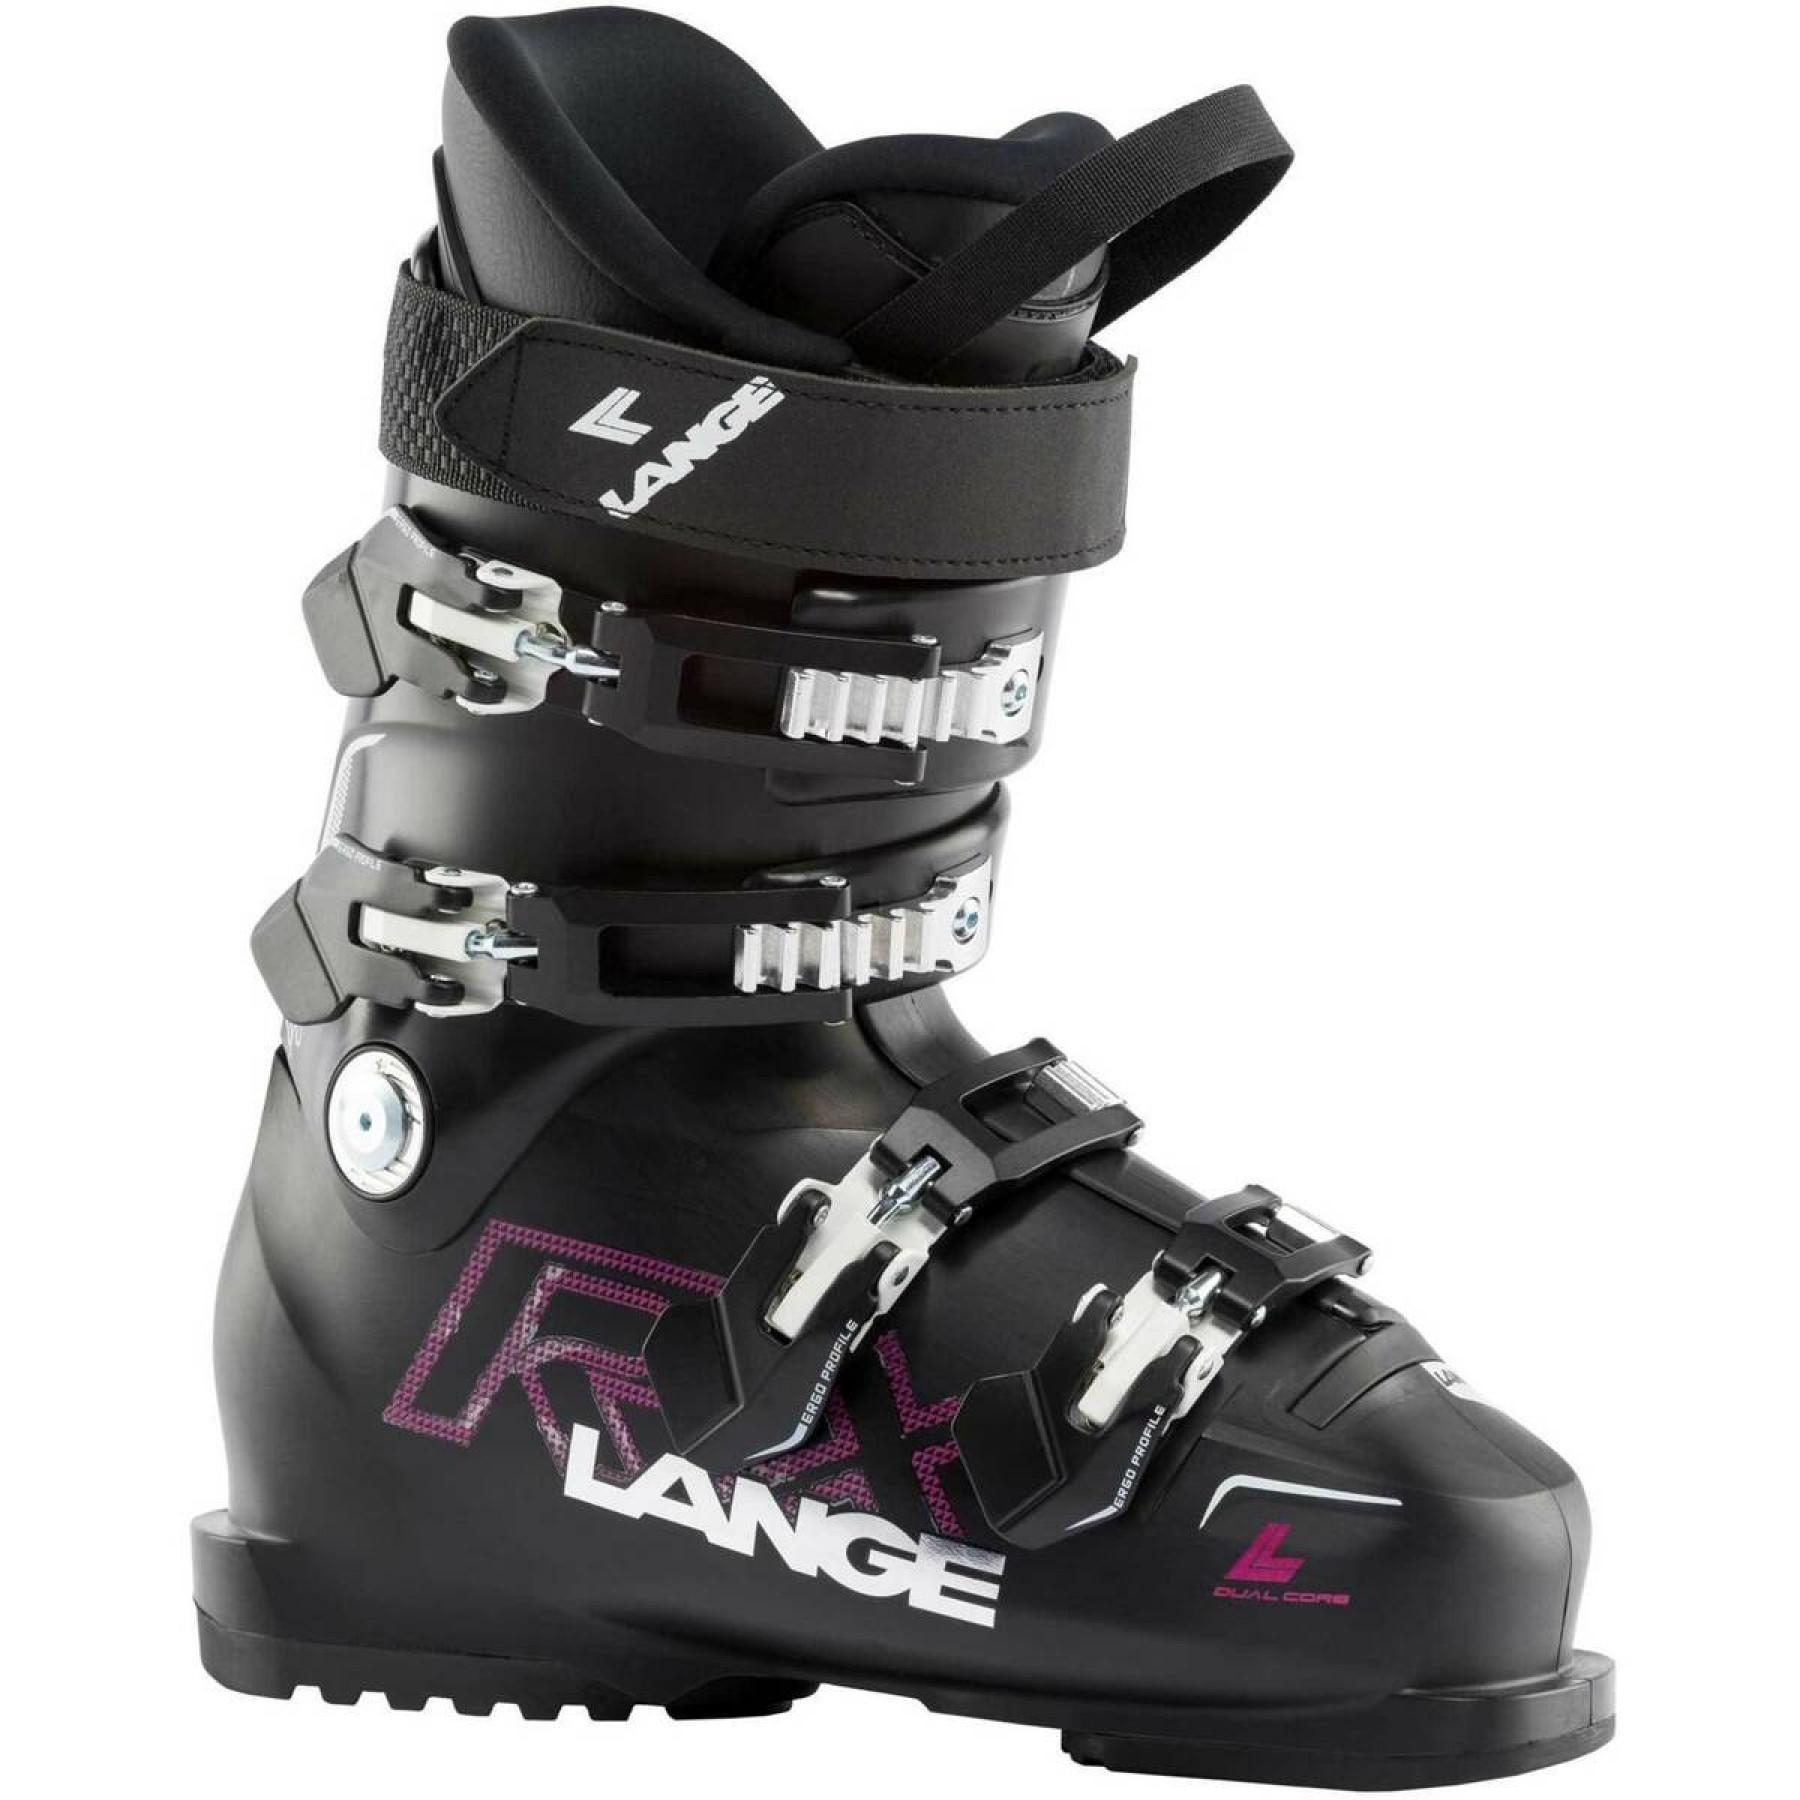 Chaussures de ski femme Lange rx elite